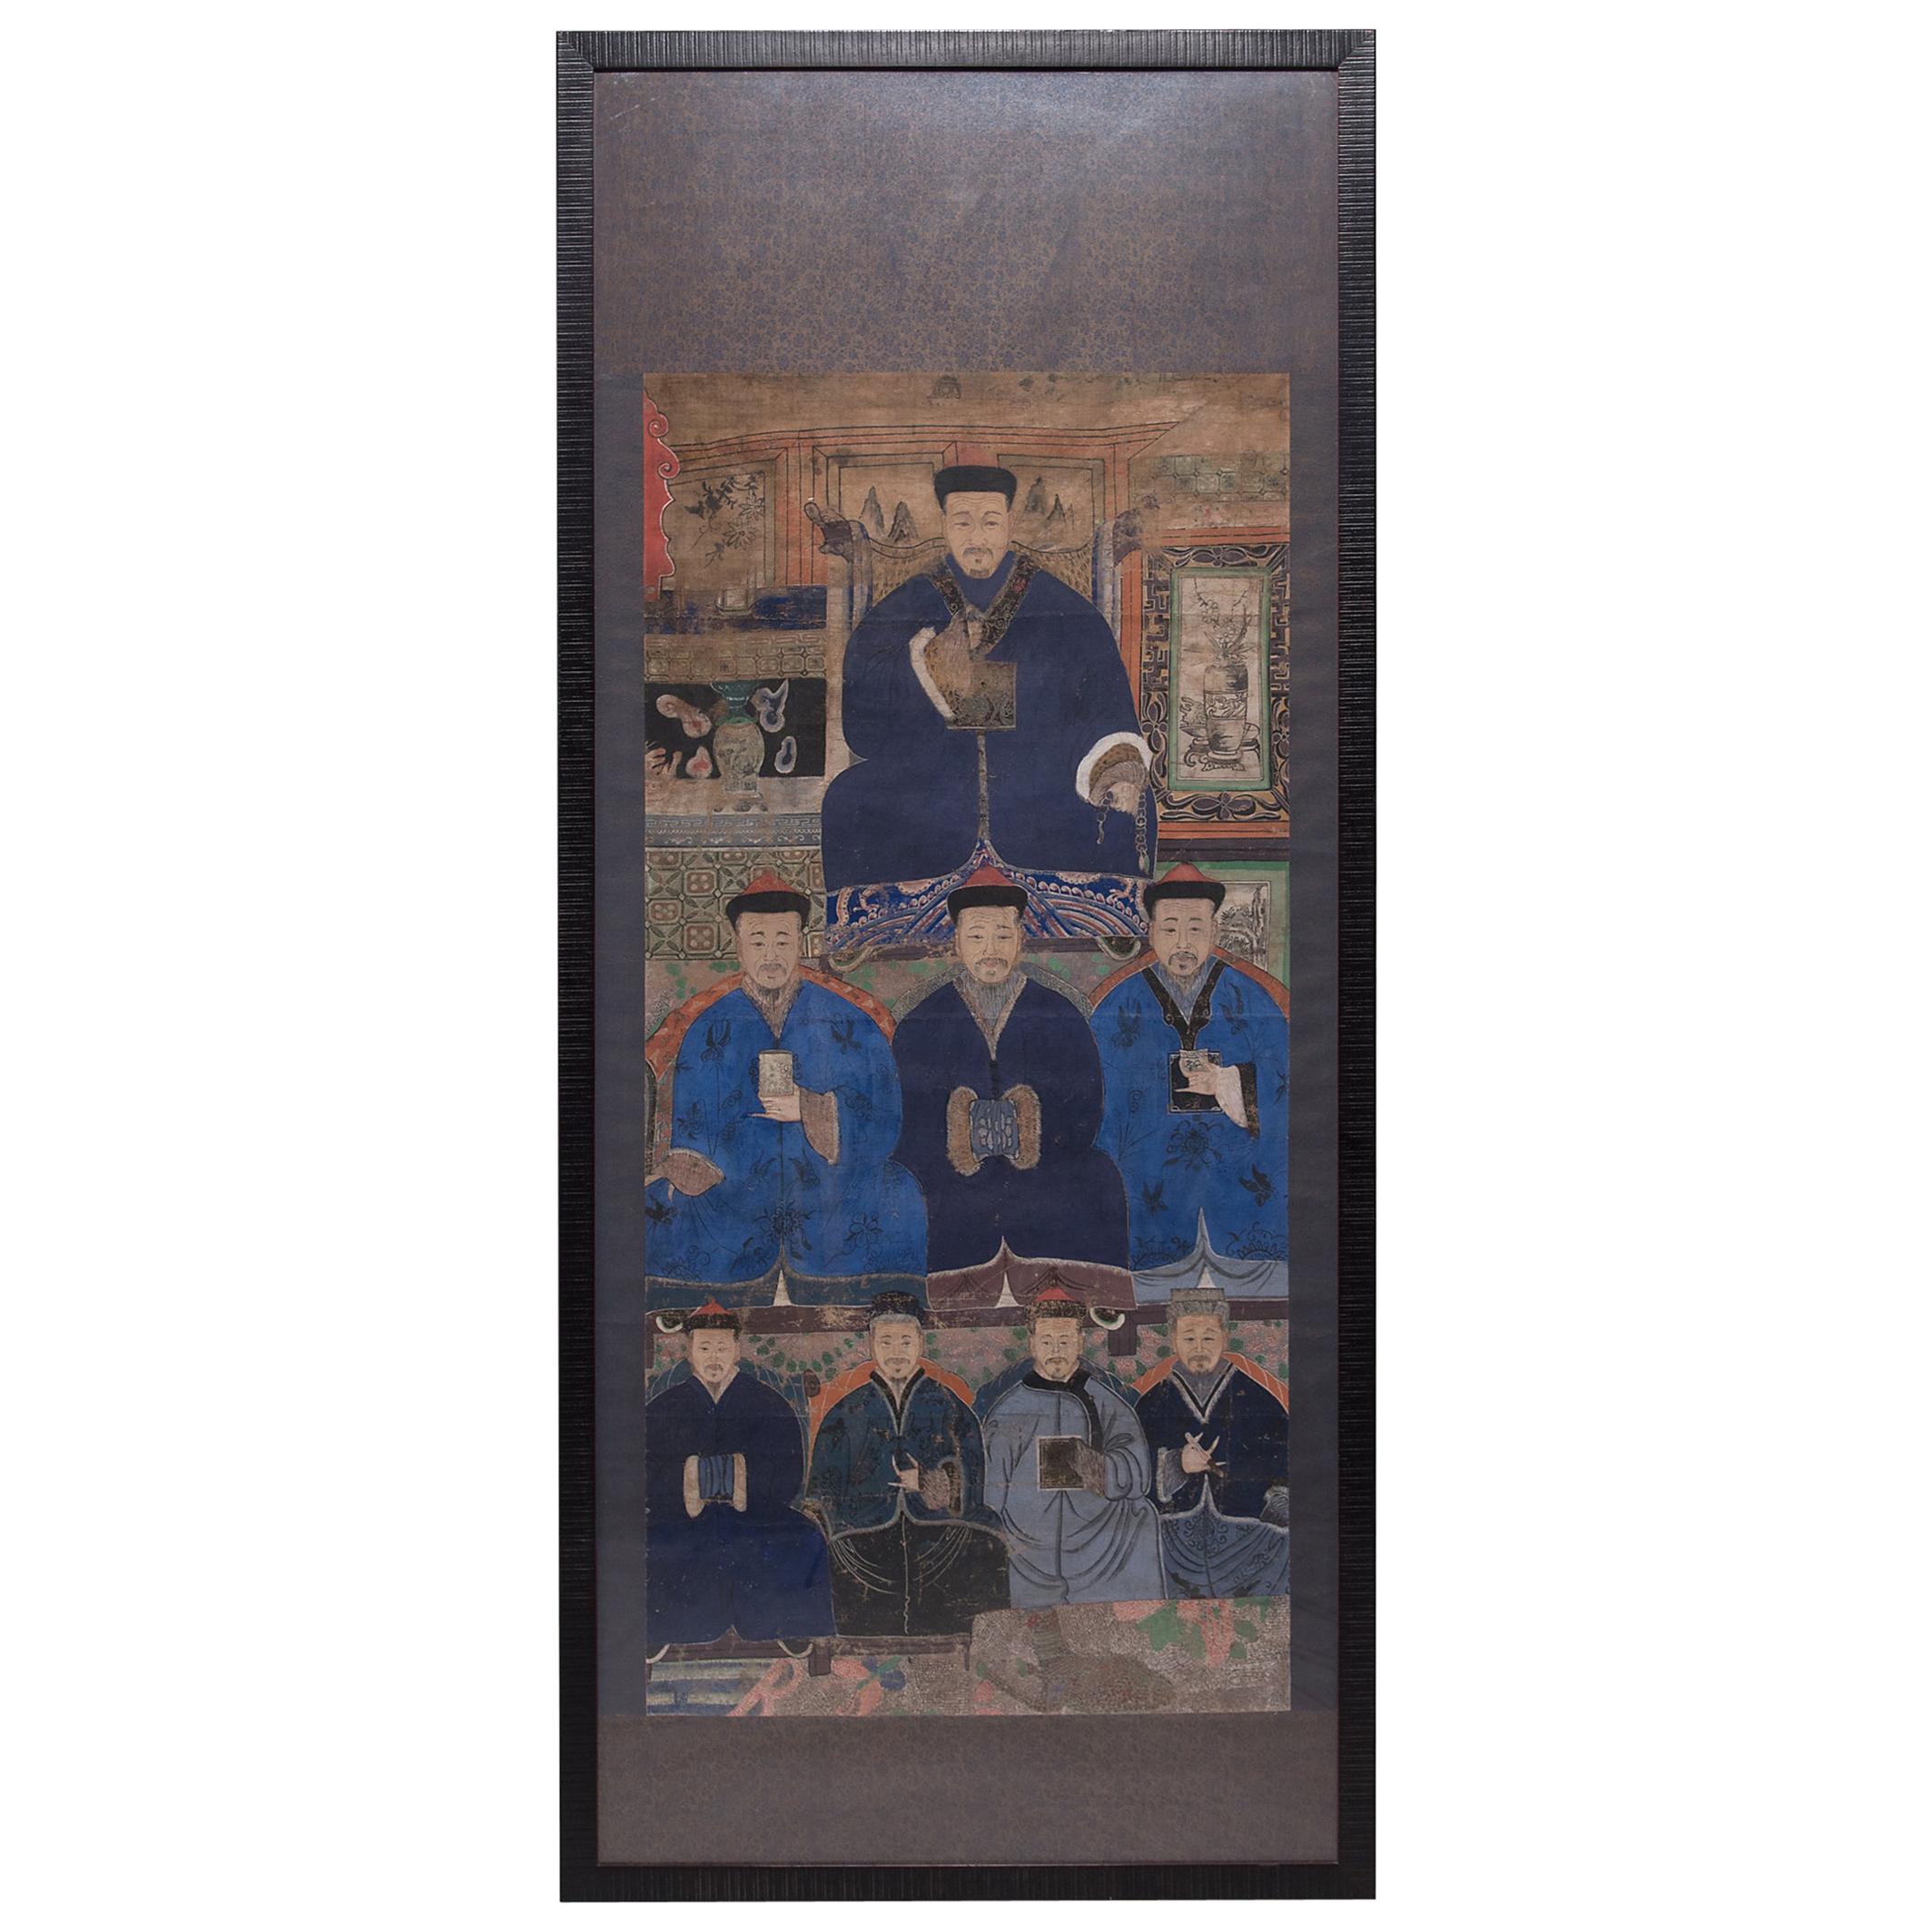 Framed Chinese Ancestor Portrait, circa 1900